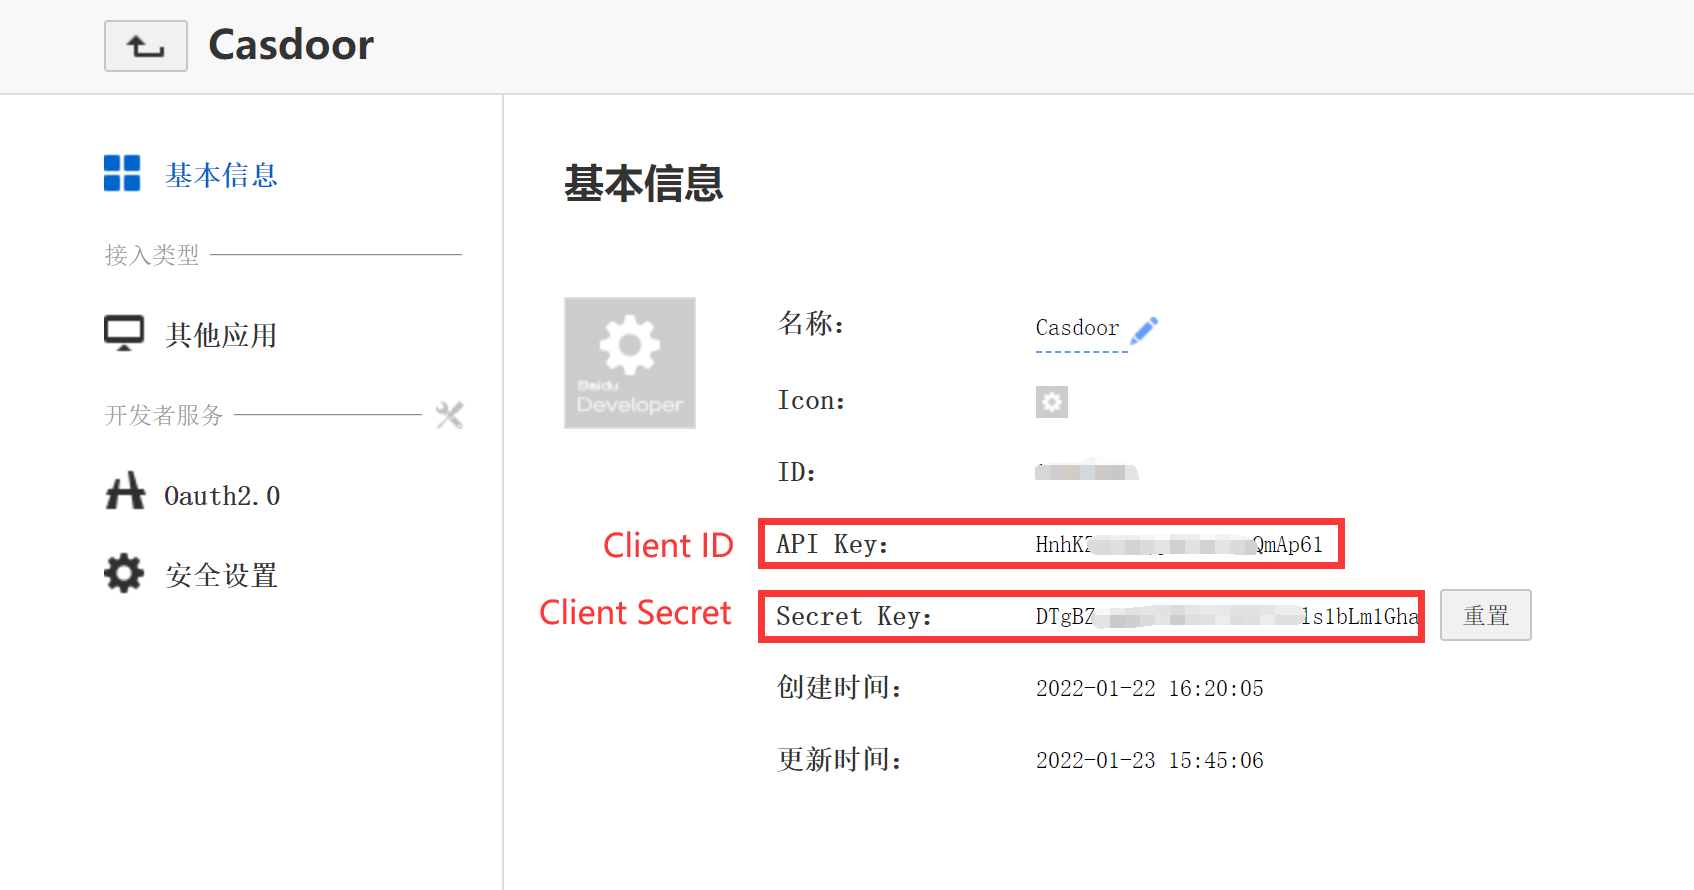 Client Baidu